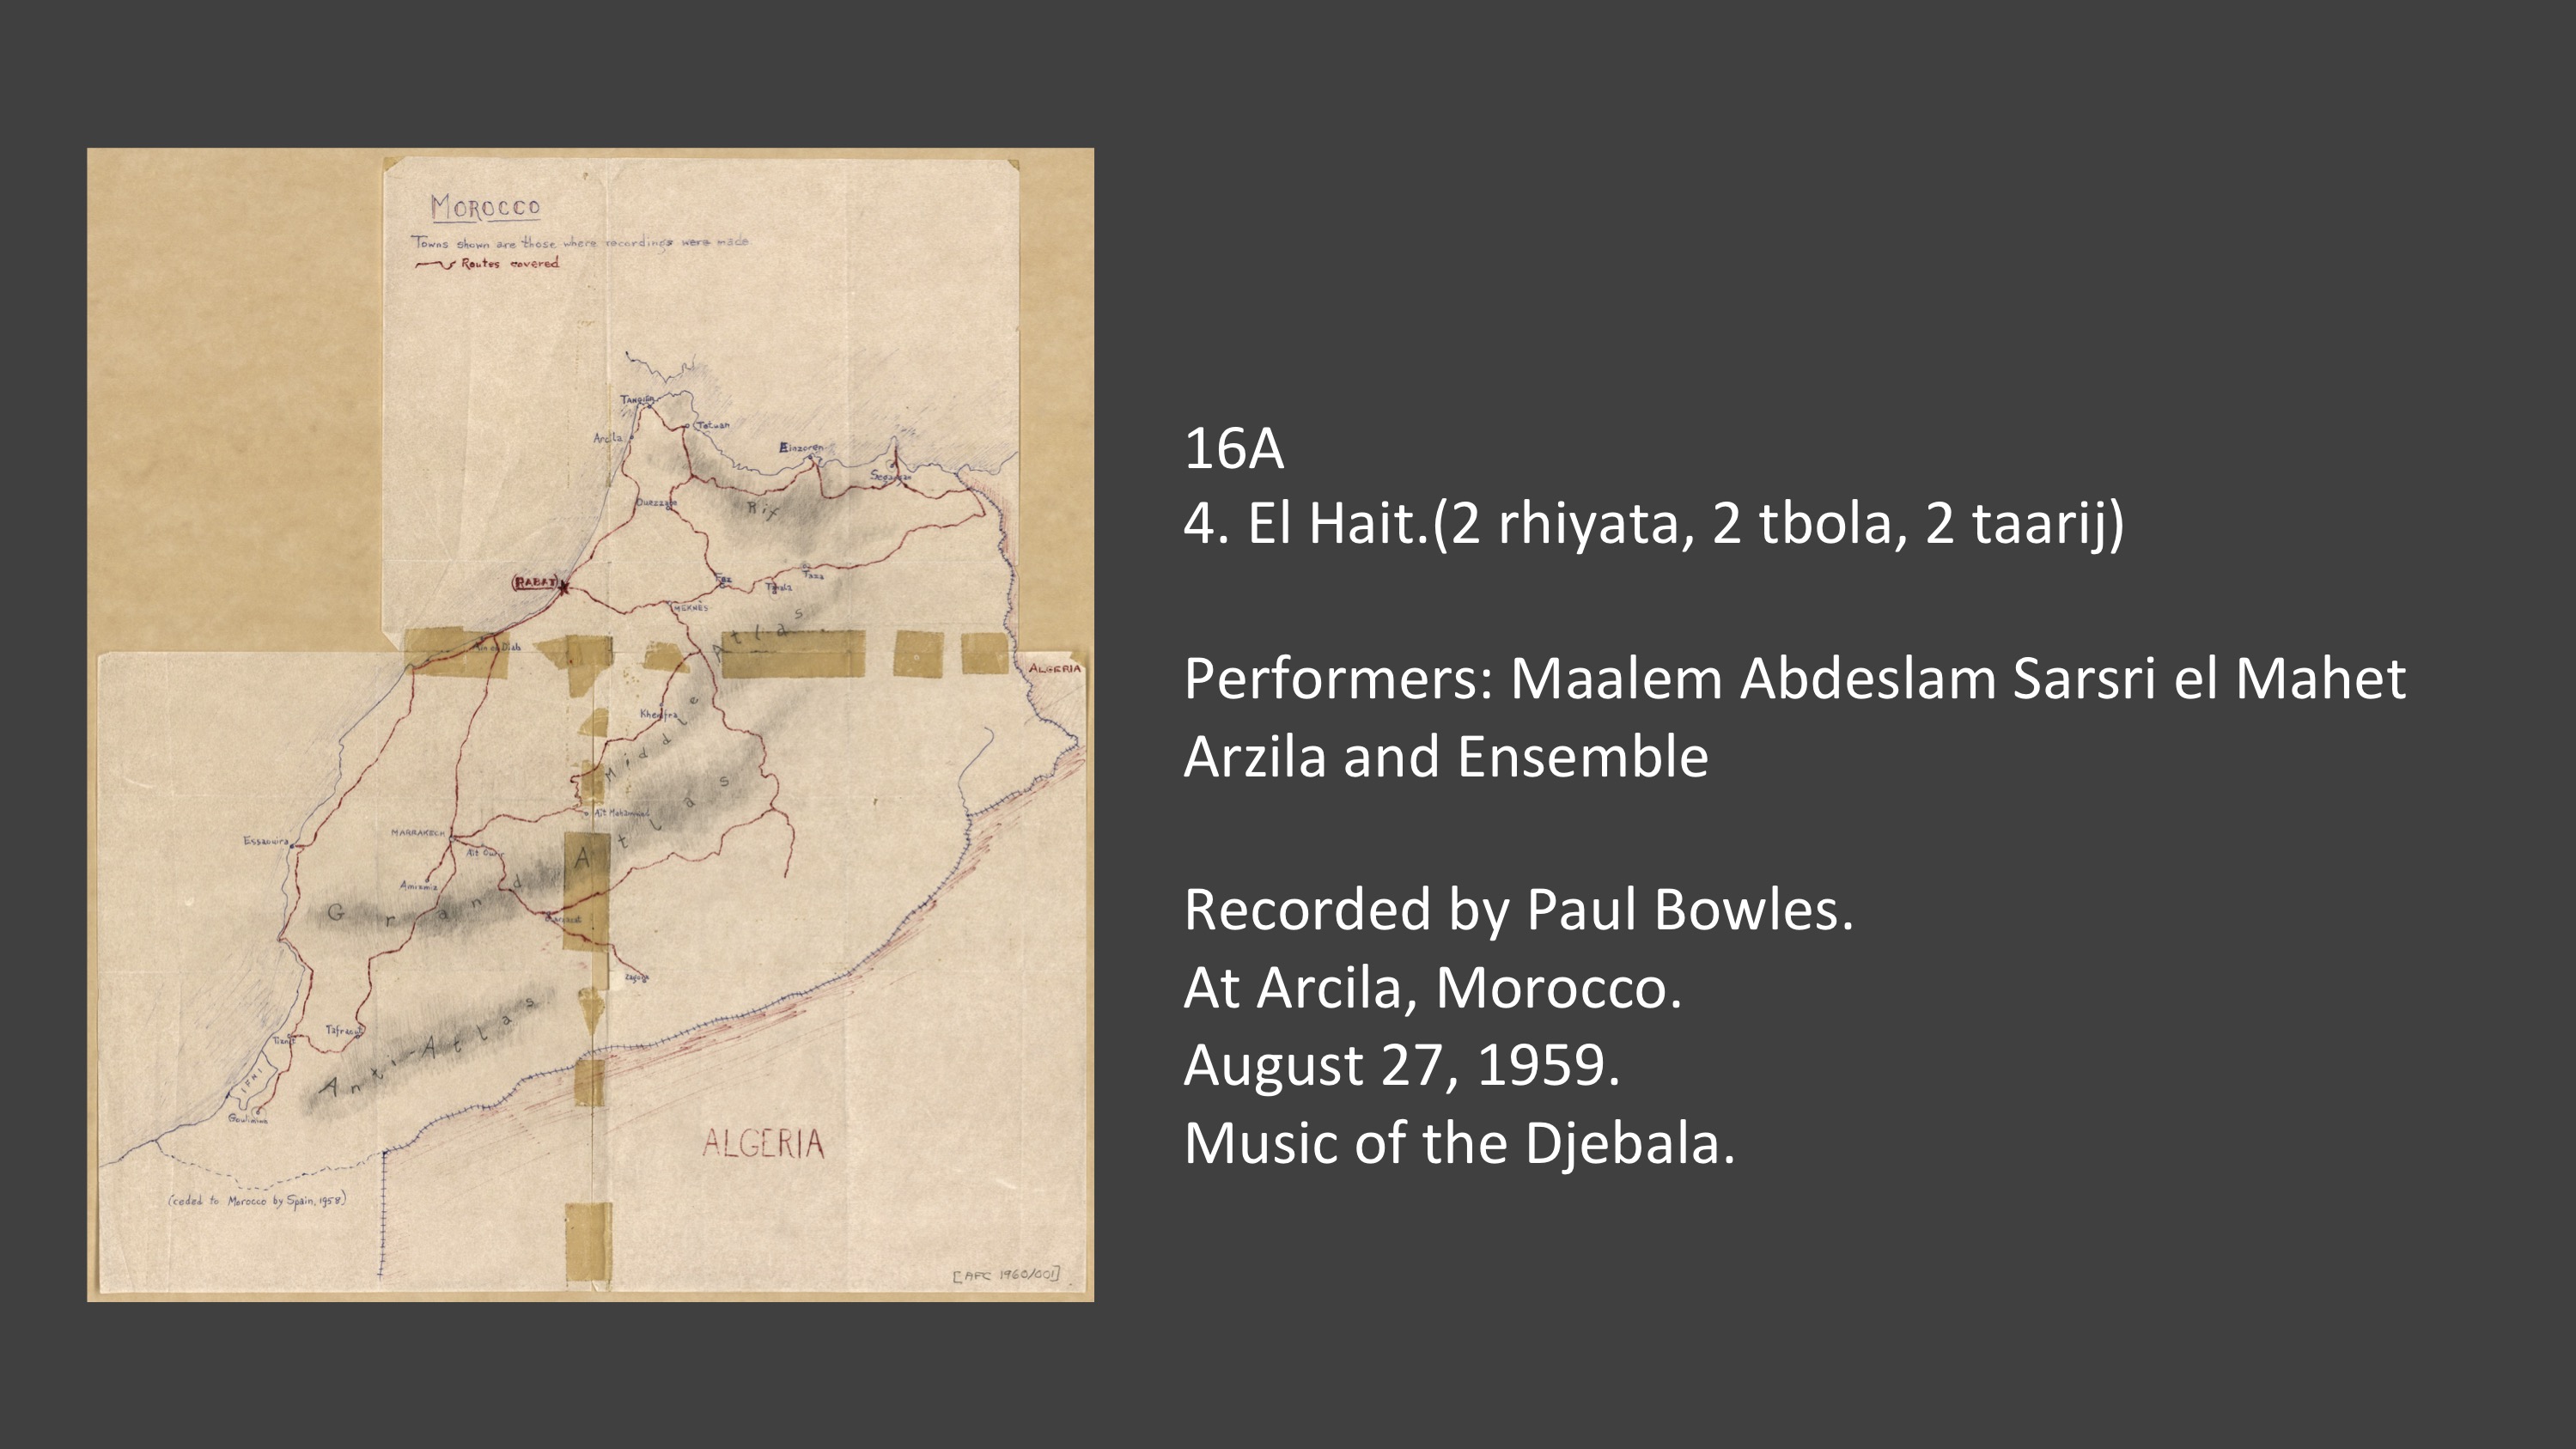 16A
4. El Hait.(2 rhiyata, 2 tbola, 2 taarij)

Performers: Maalem Abdeslam Sarsri el Mahet Arzila and Ensemble

Recorded by Paul Bowles.
At Arcila, Morocco.
August 27, 1959.
Music of the Djebala.
